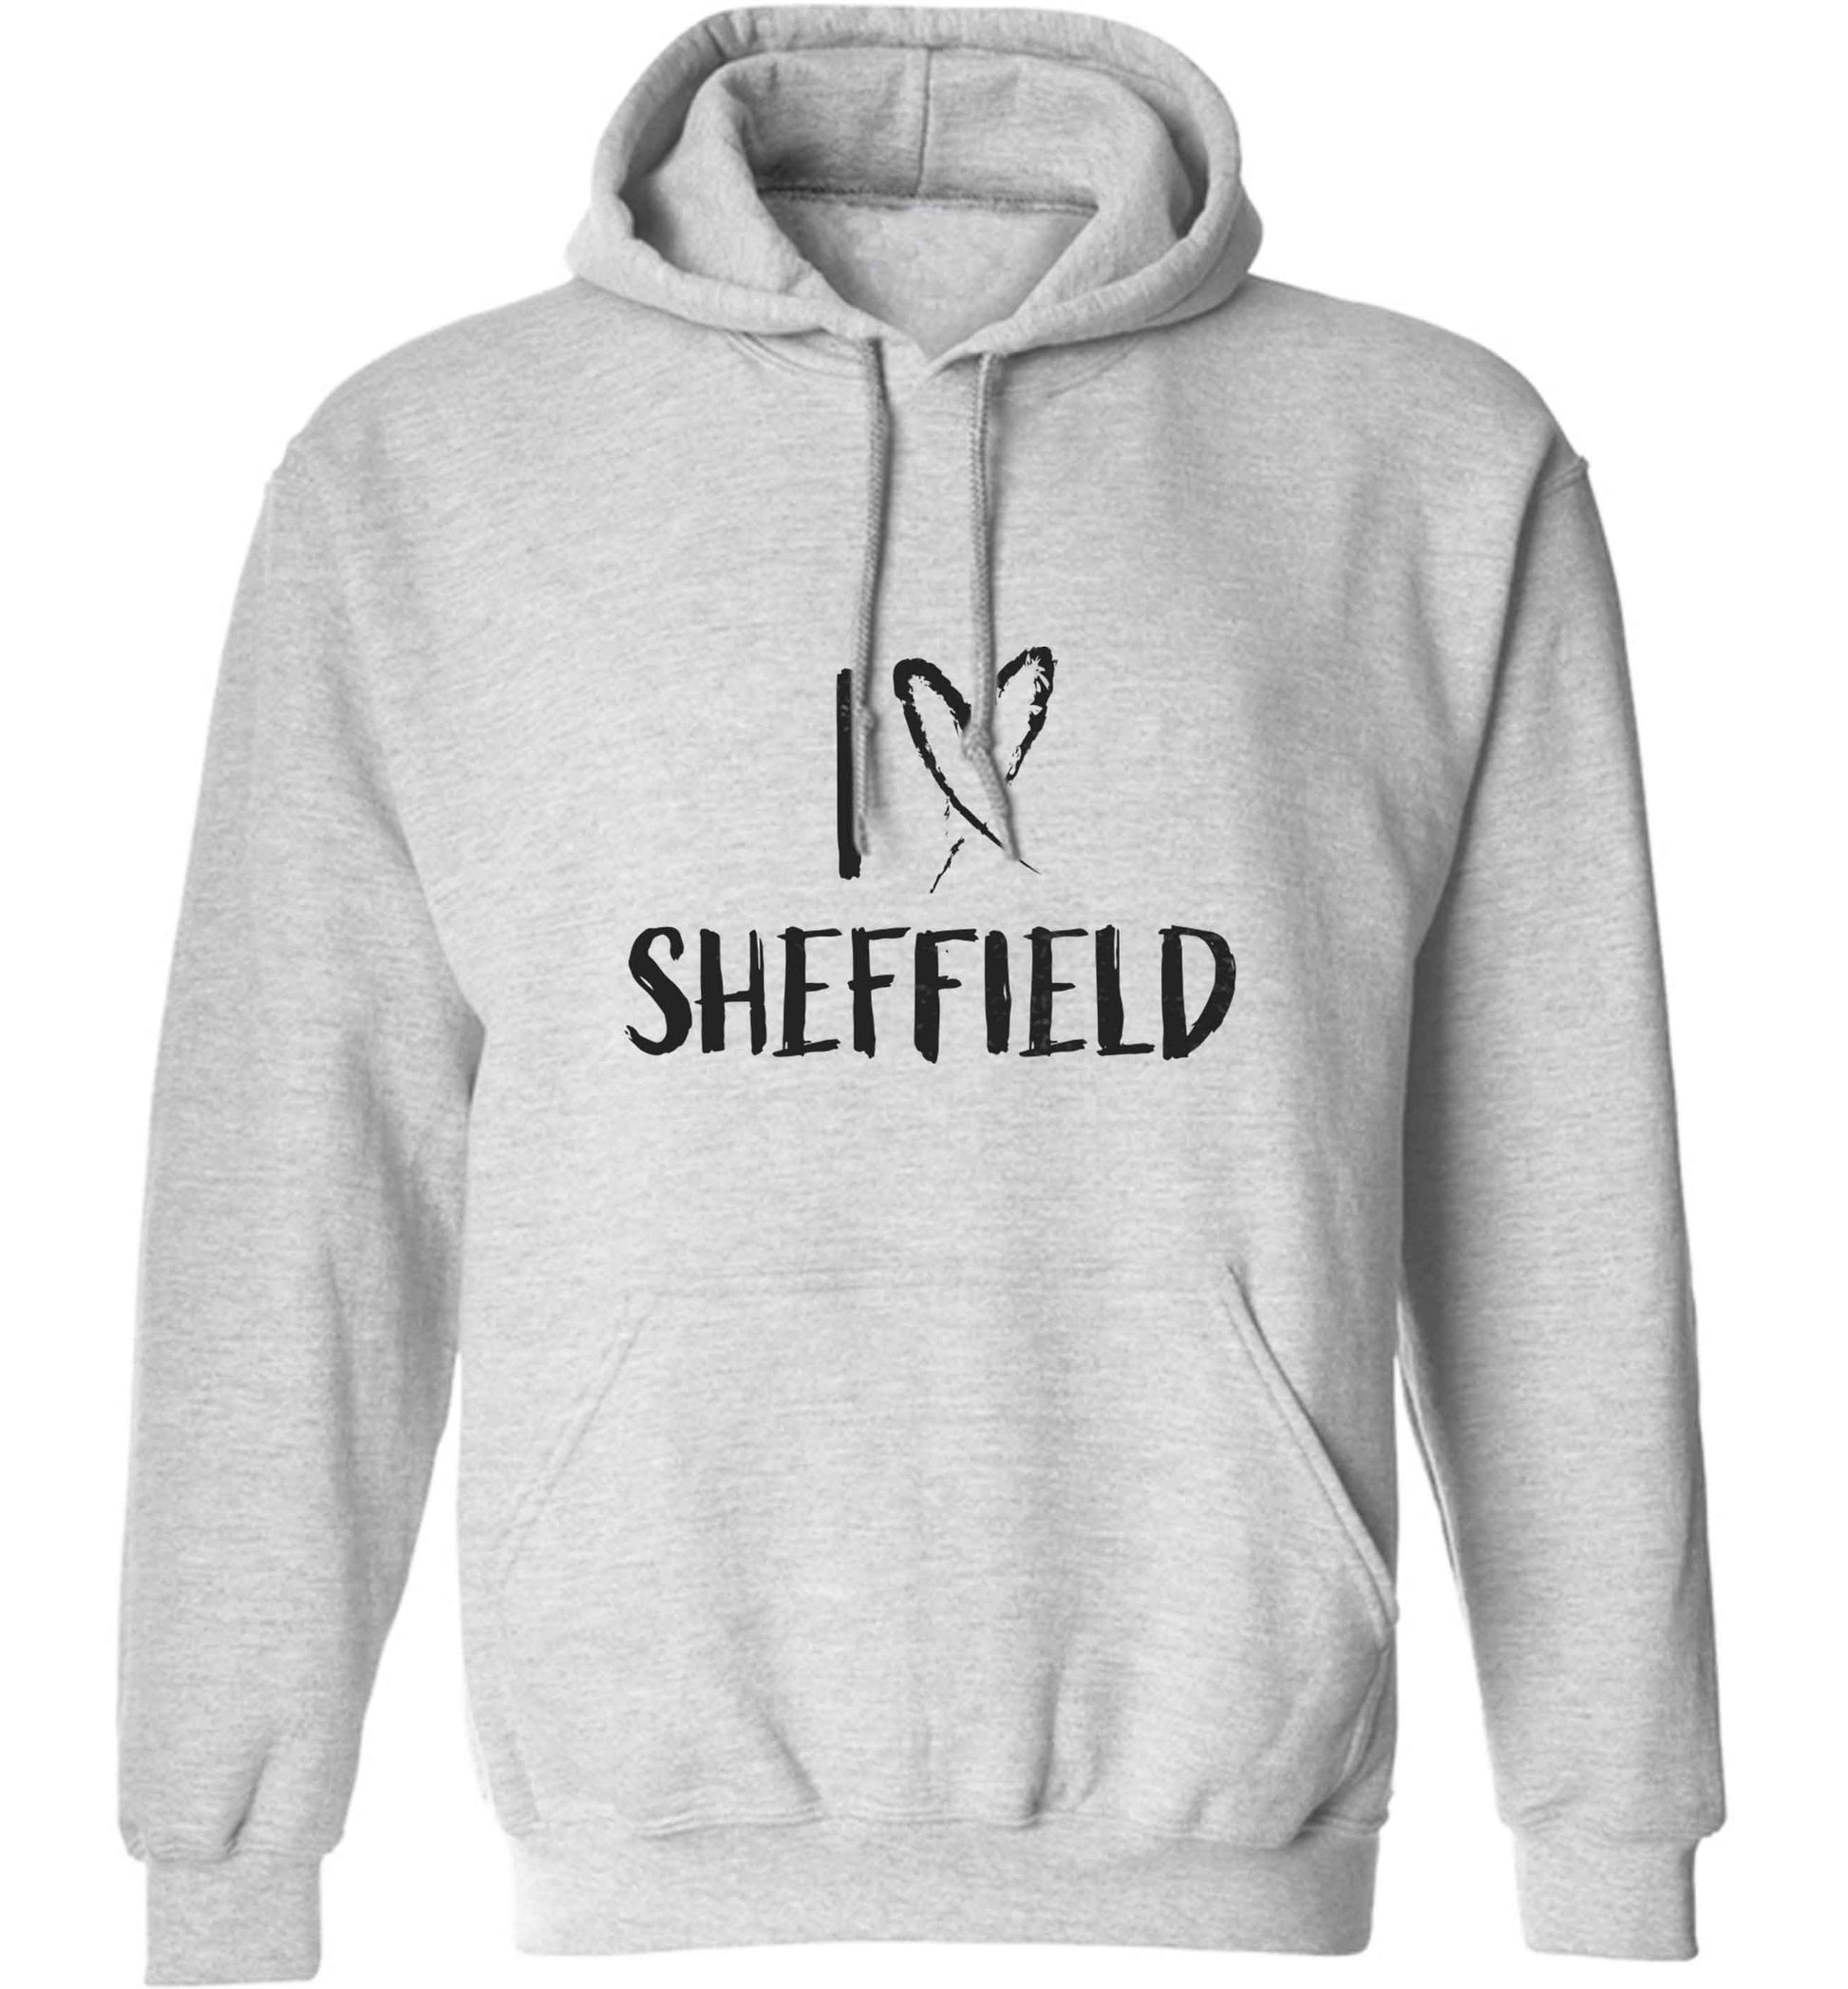 I love Sheffield adults unisex grey hoodie 2XL